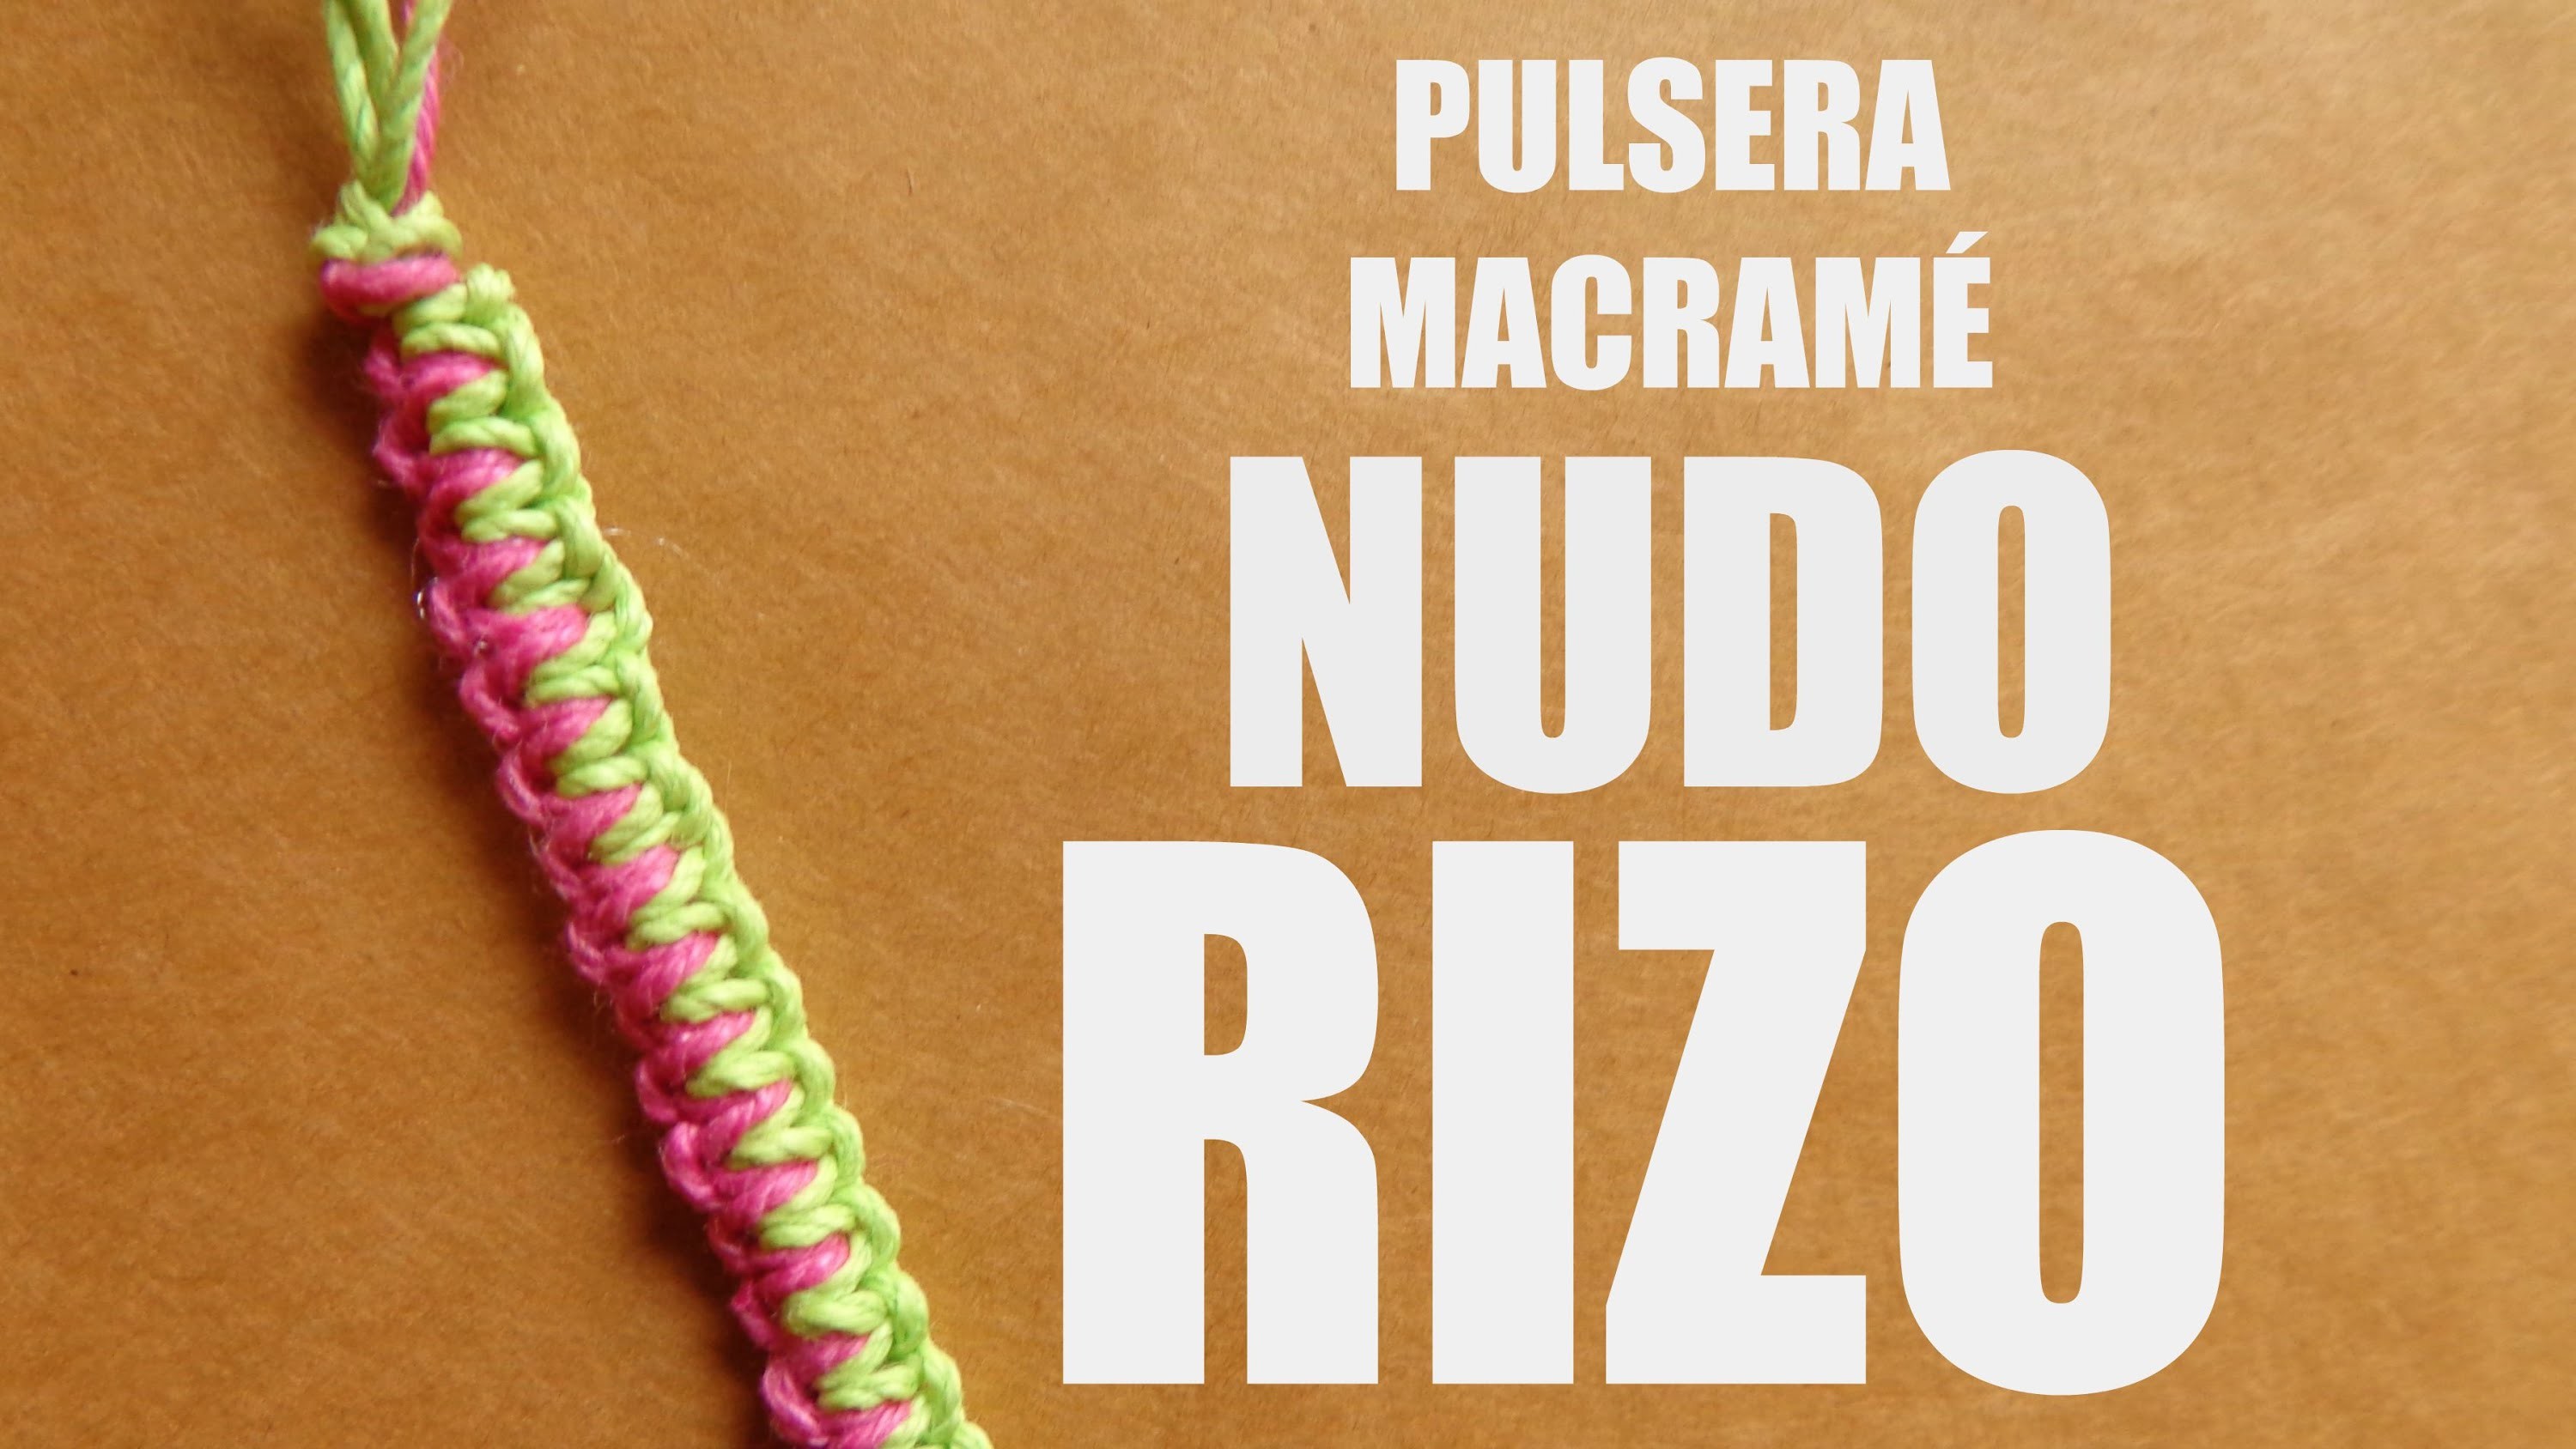 Pulsera Macrame: Nudo Rizo. Pulseras de hilo